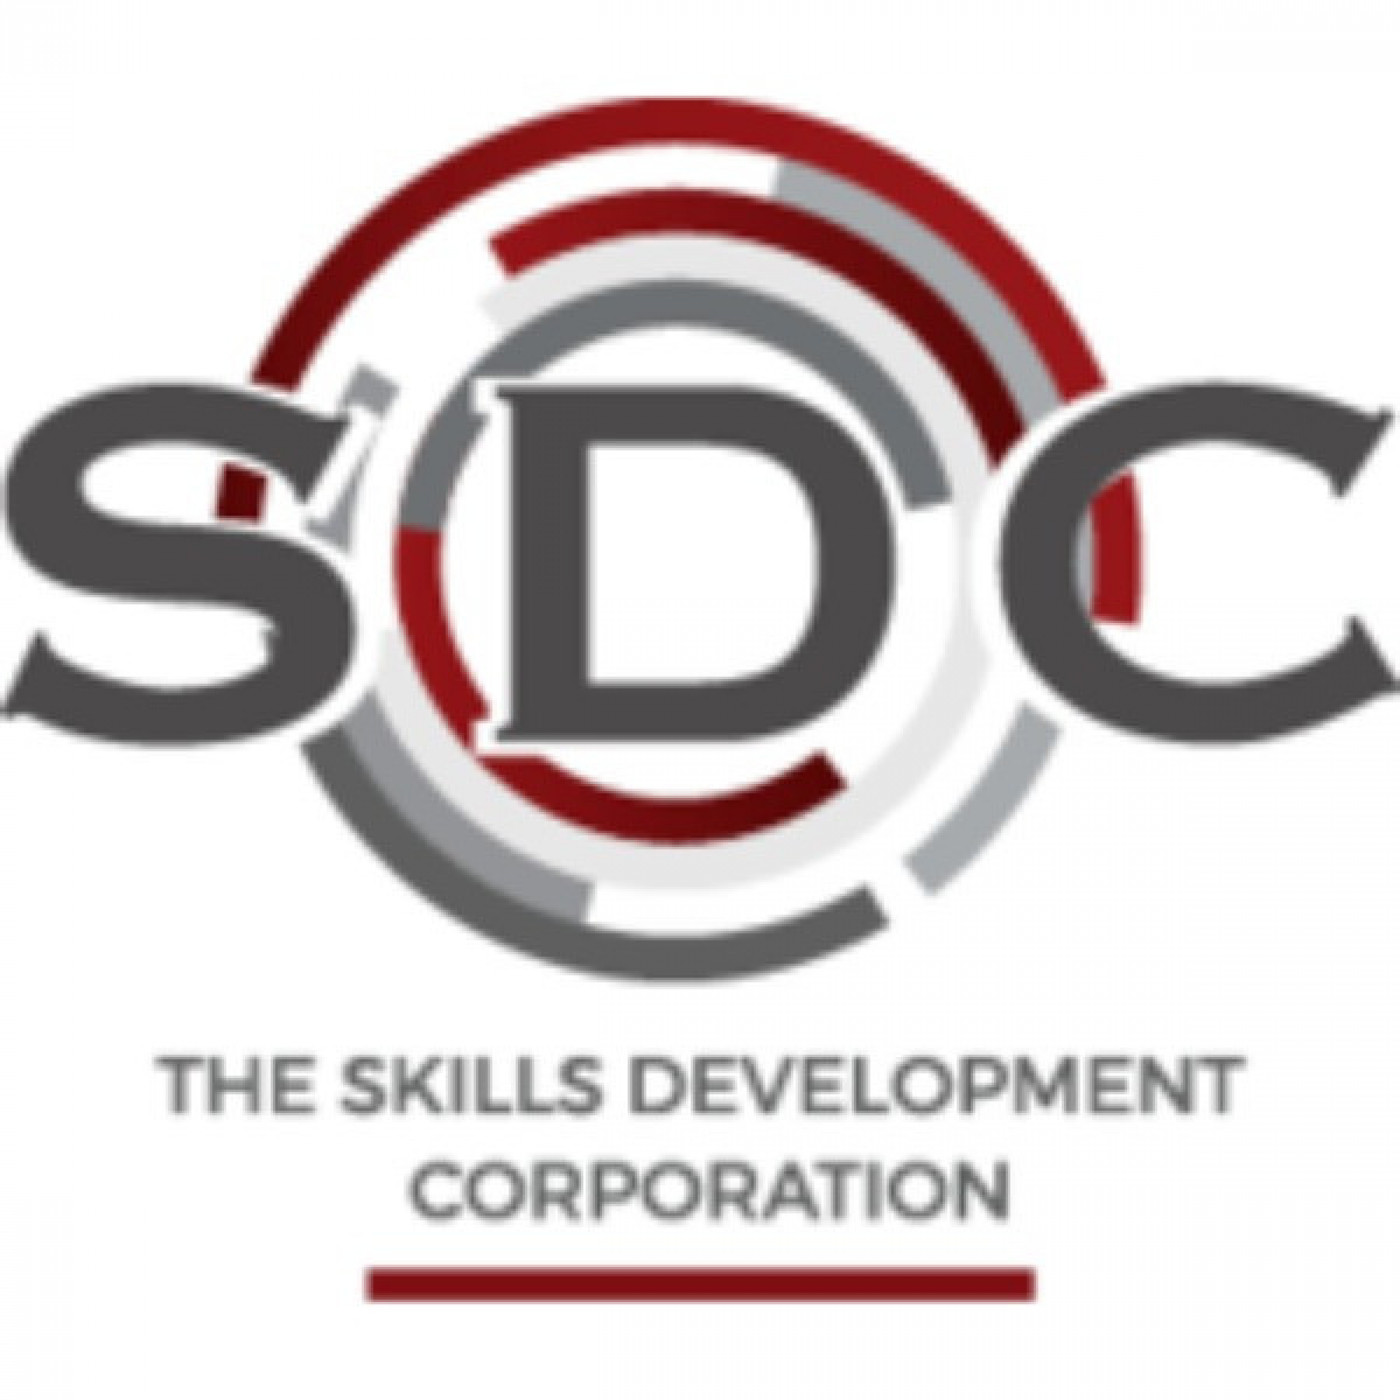 Importance of skills development